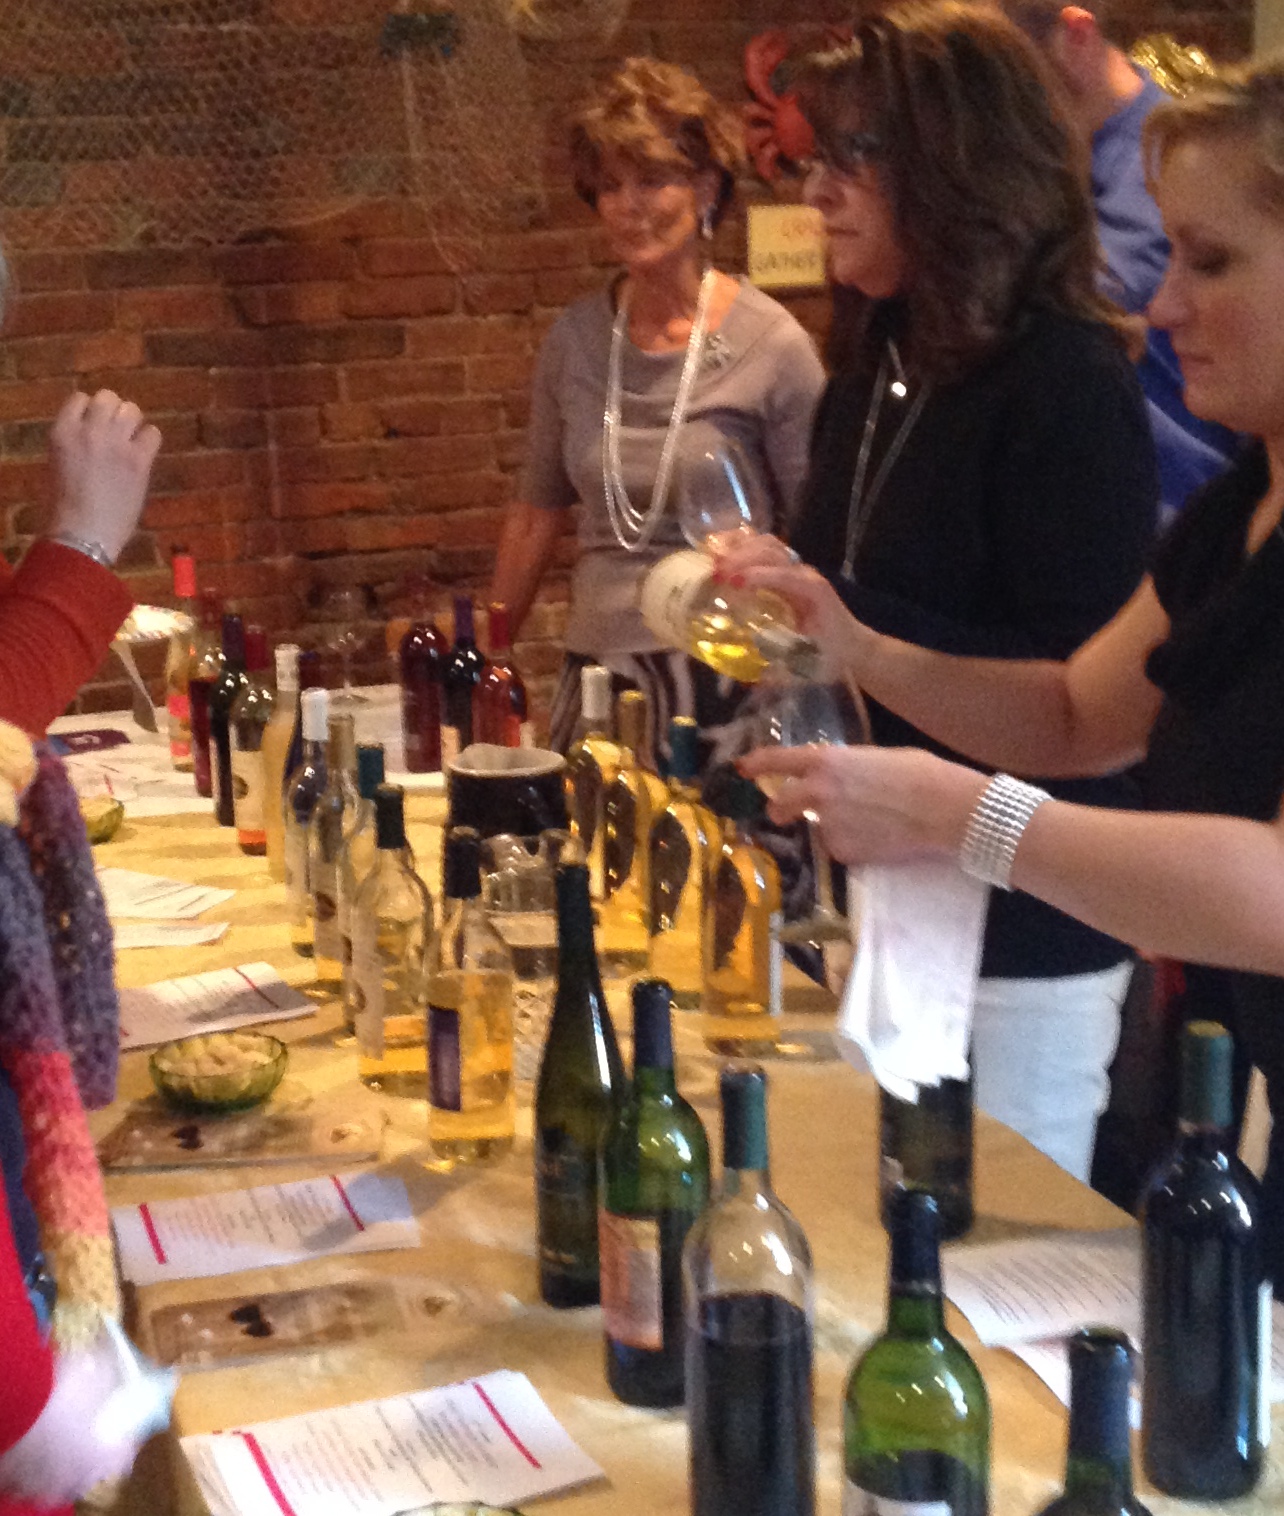 pix-wine tasting 2013 pourers at wine table.JPG